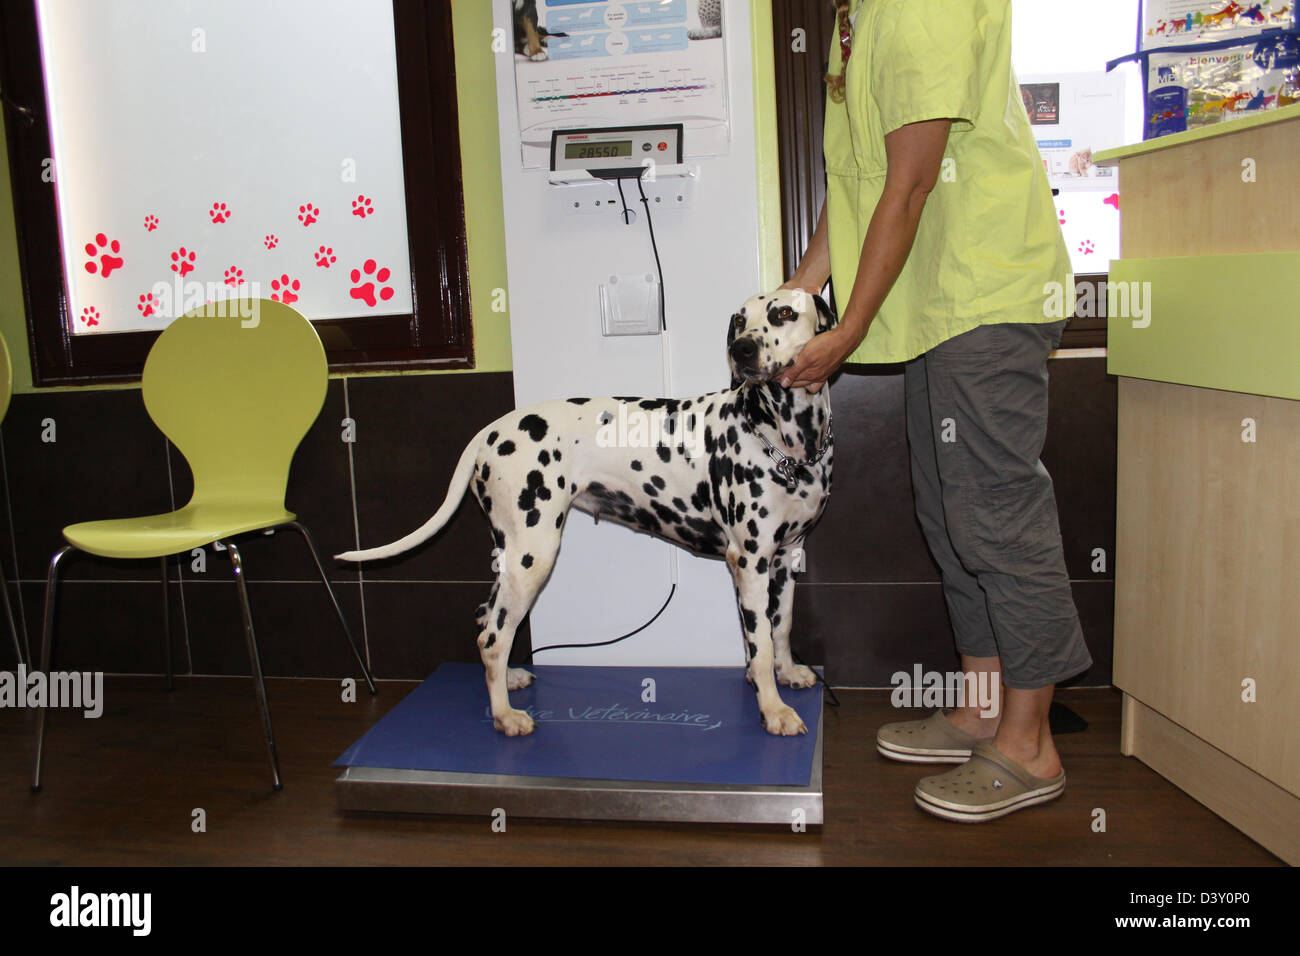 Veterinary weighs a dog Dalmatian / Dalmatiner / Dalmatien Stock Photo